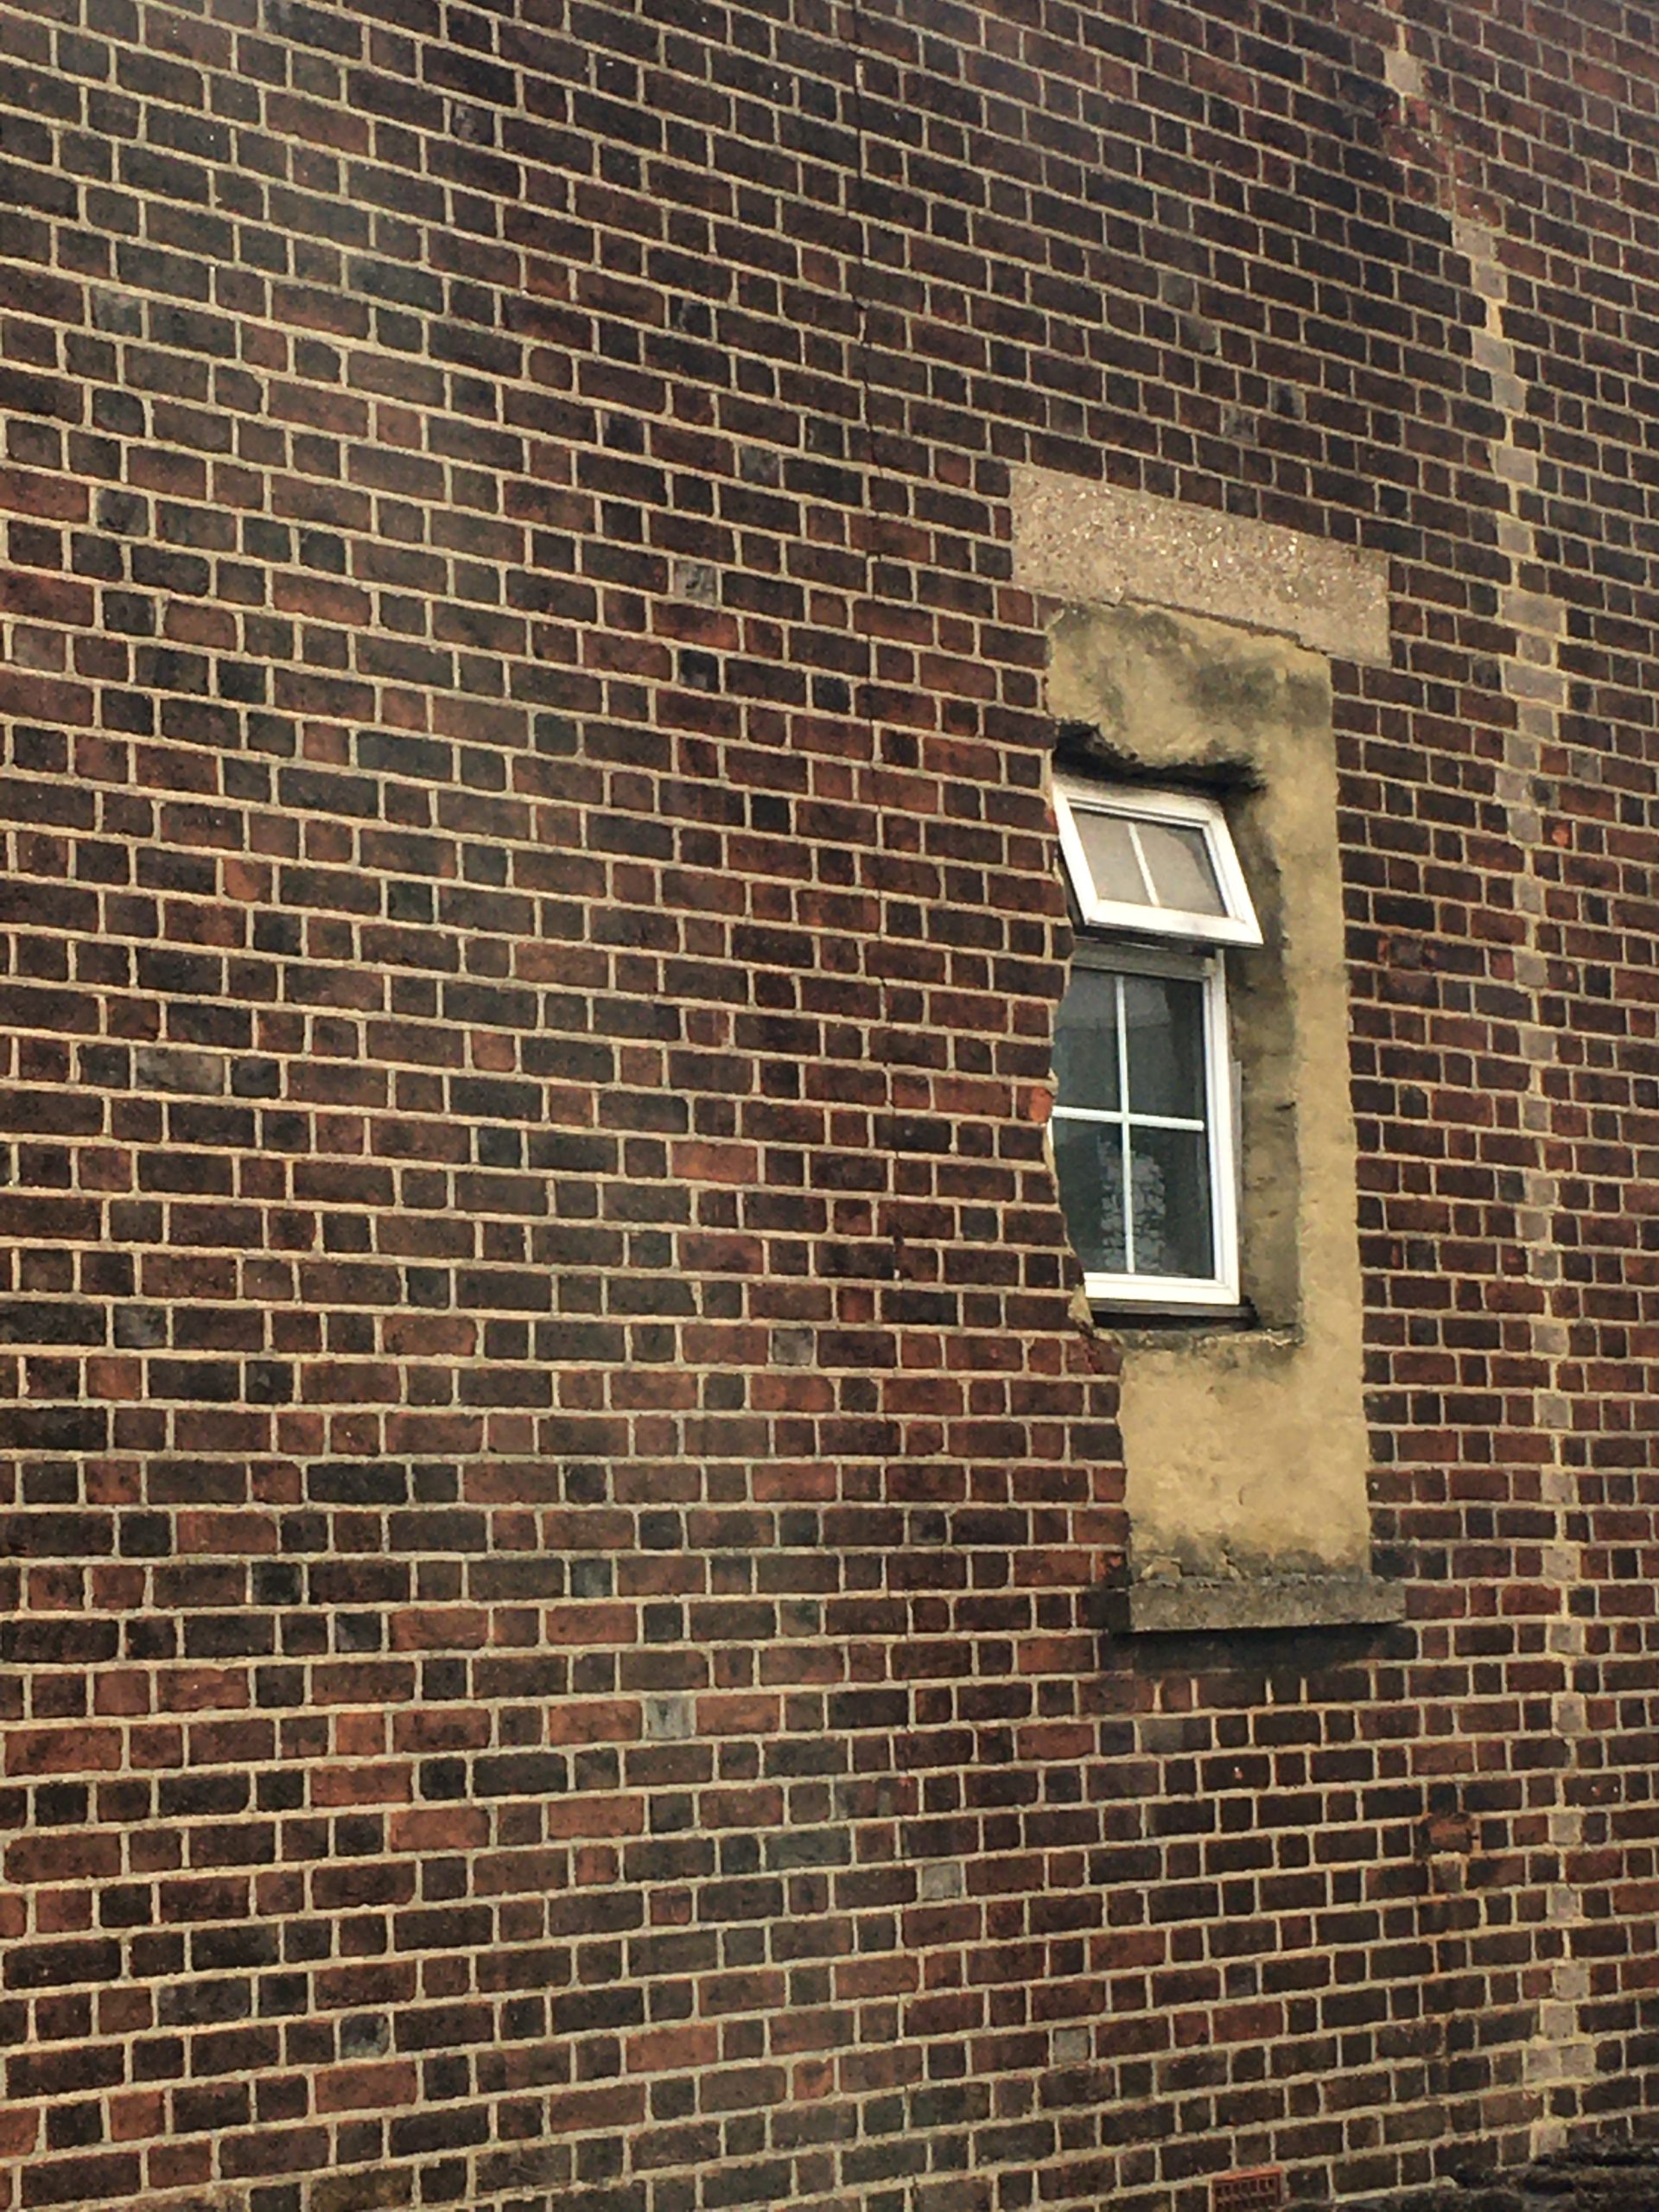 An oddly cut window in South London on my commute.